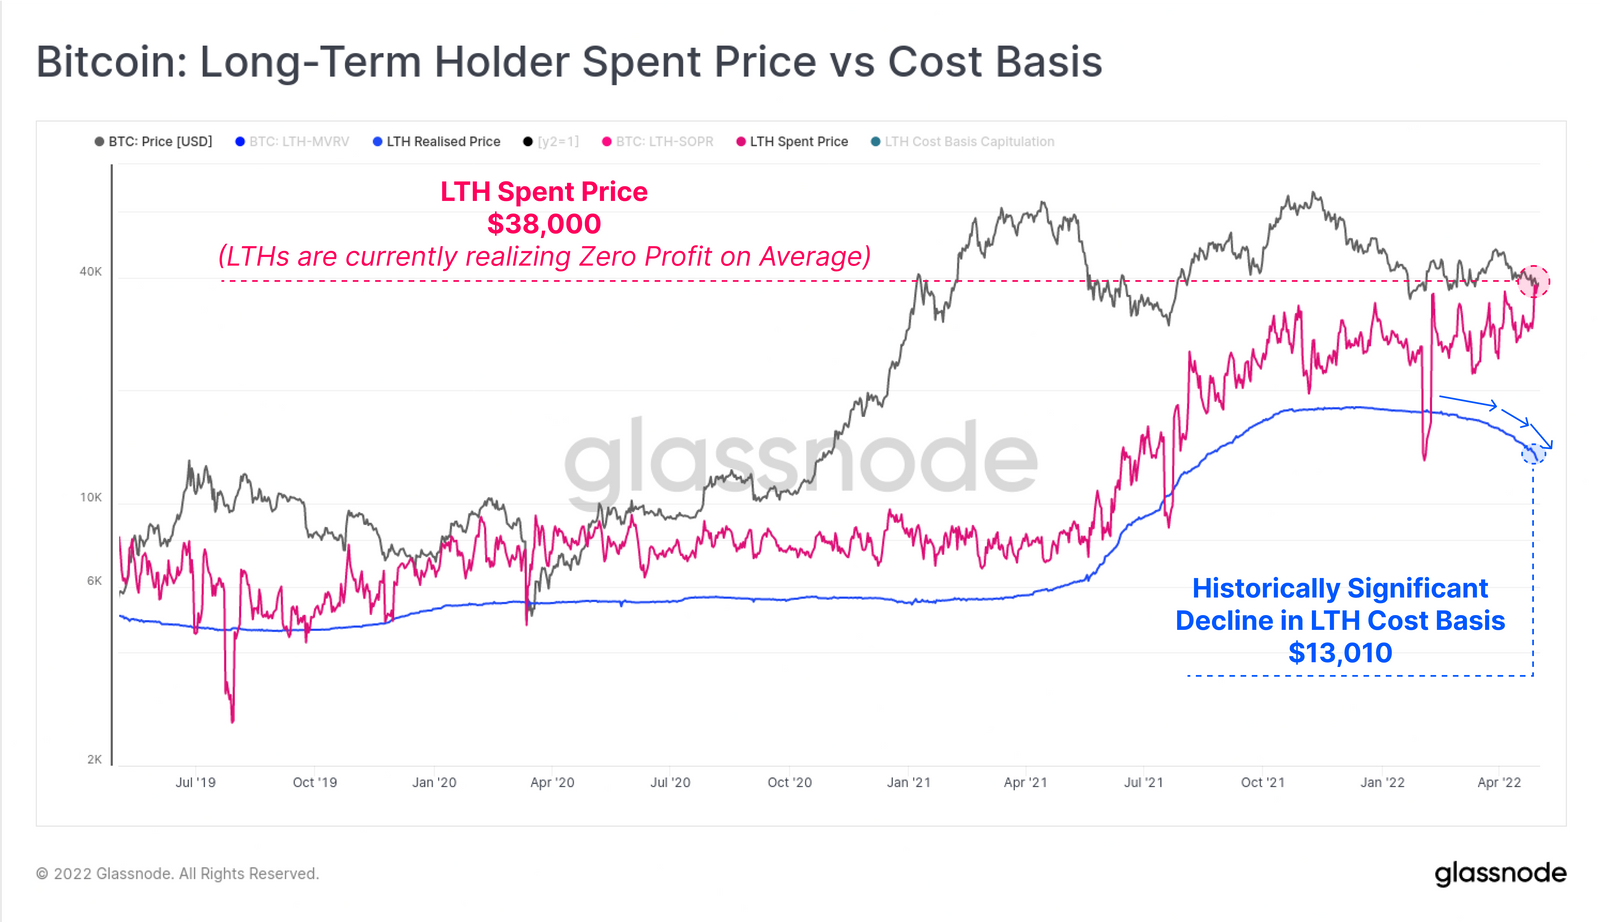 BTC long-term holder spent price vs. cost basis